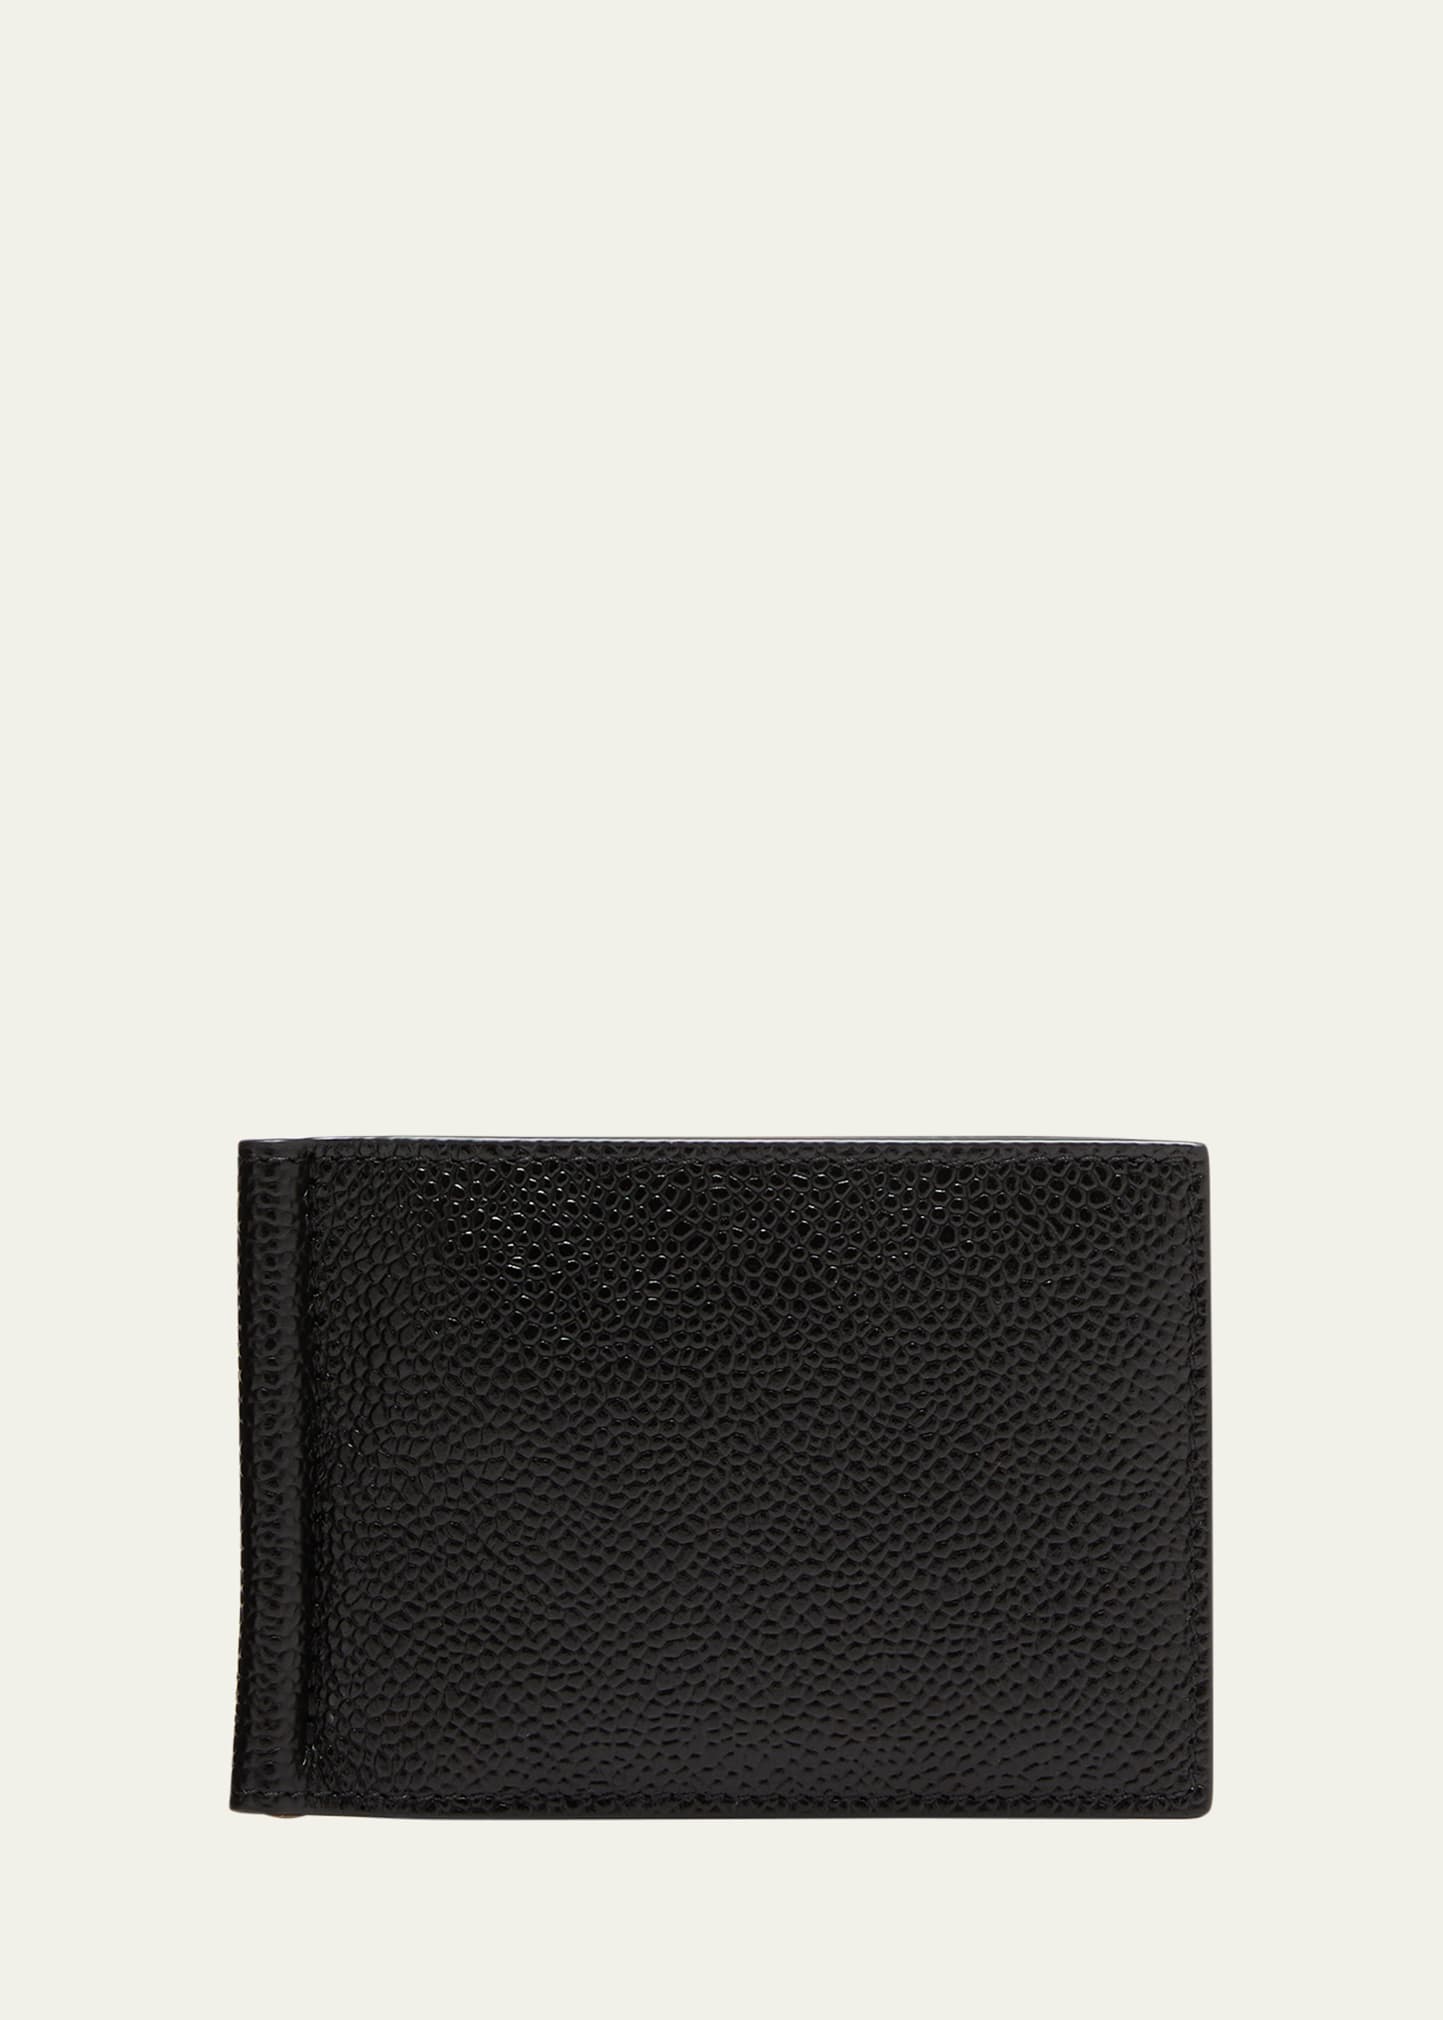 Thom Browne Men's Pebble Grain Leather Money Clip Wallet In Black